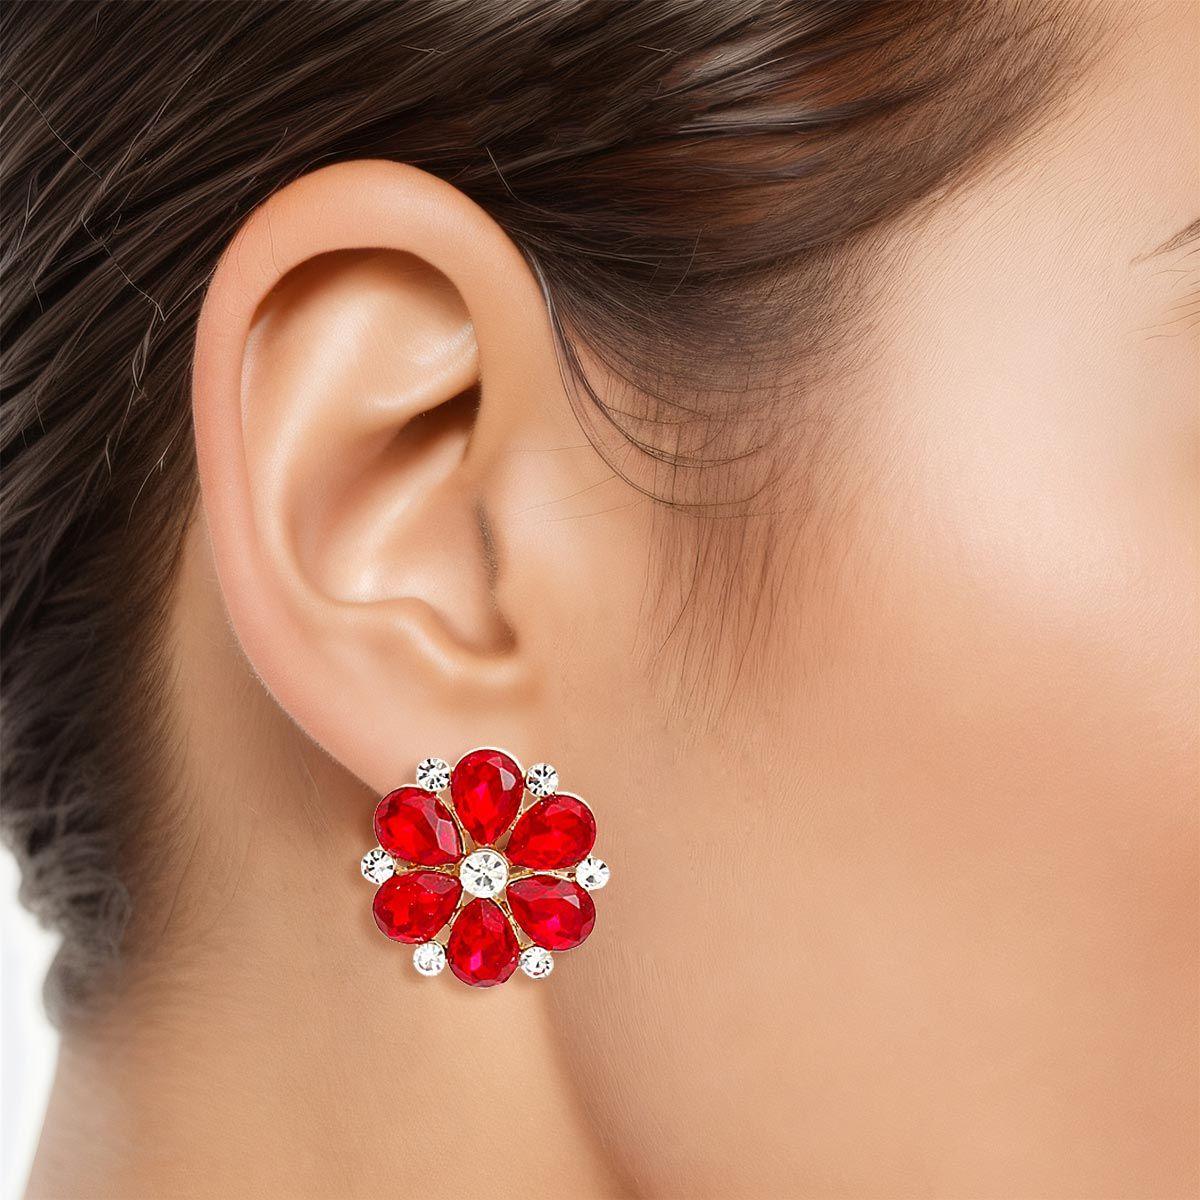 Red Cluster Flower Stud Earrings - Fashion Jewelry